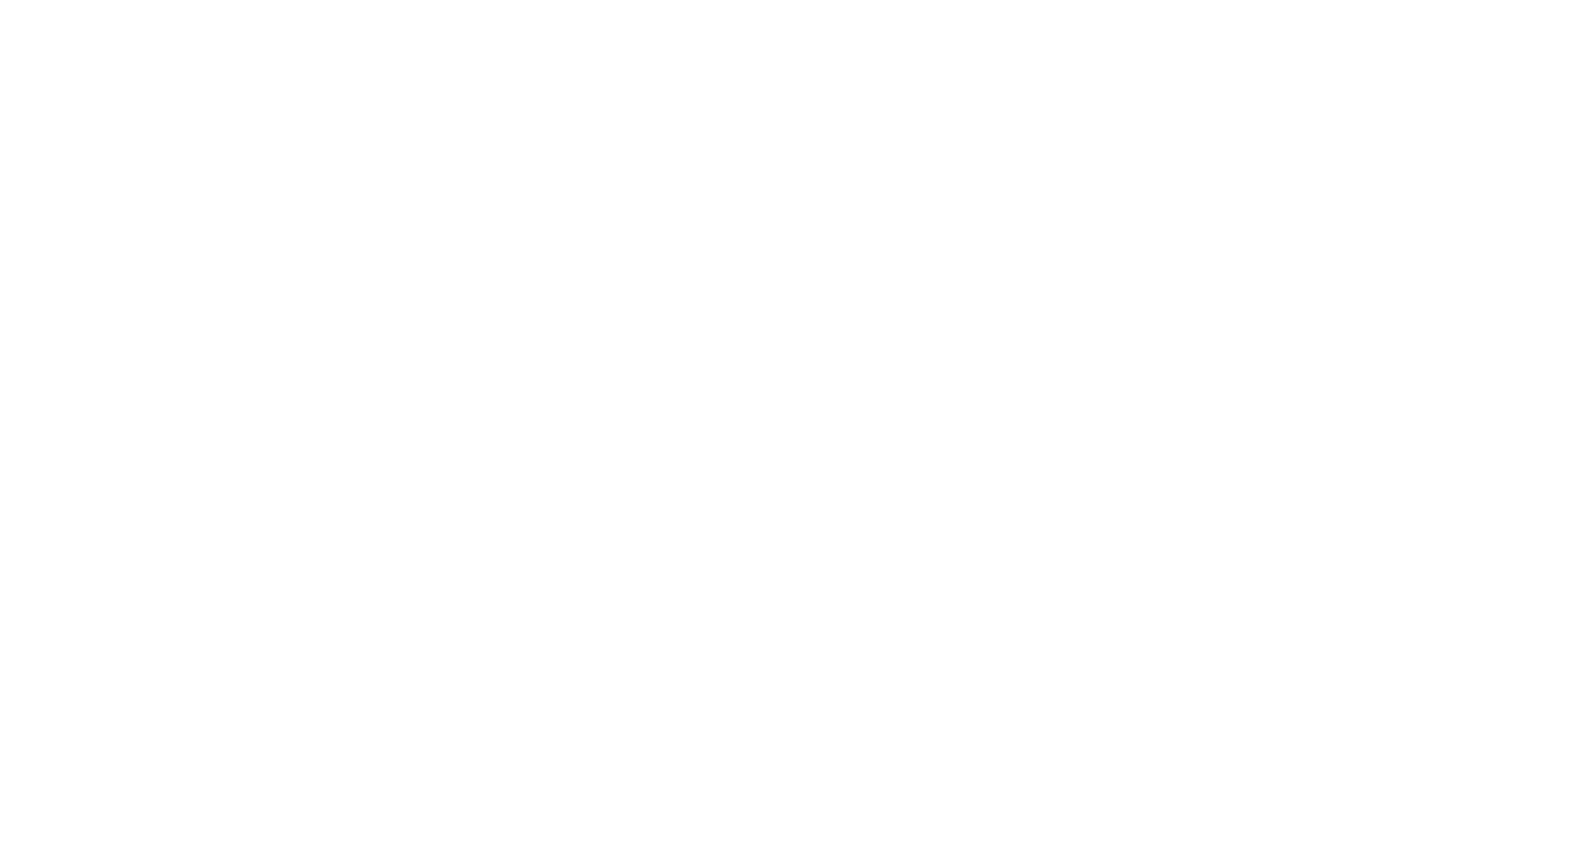 Parallel Logo - EMA Logos » Early Music America